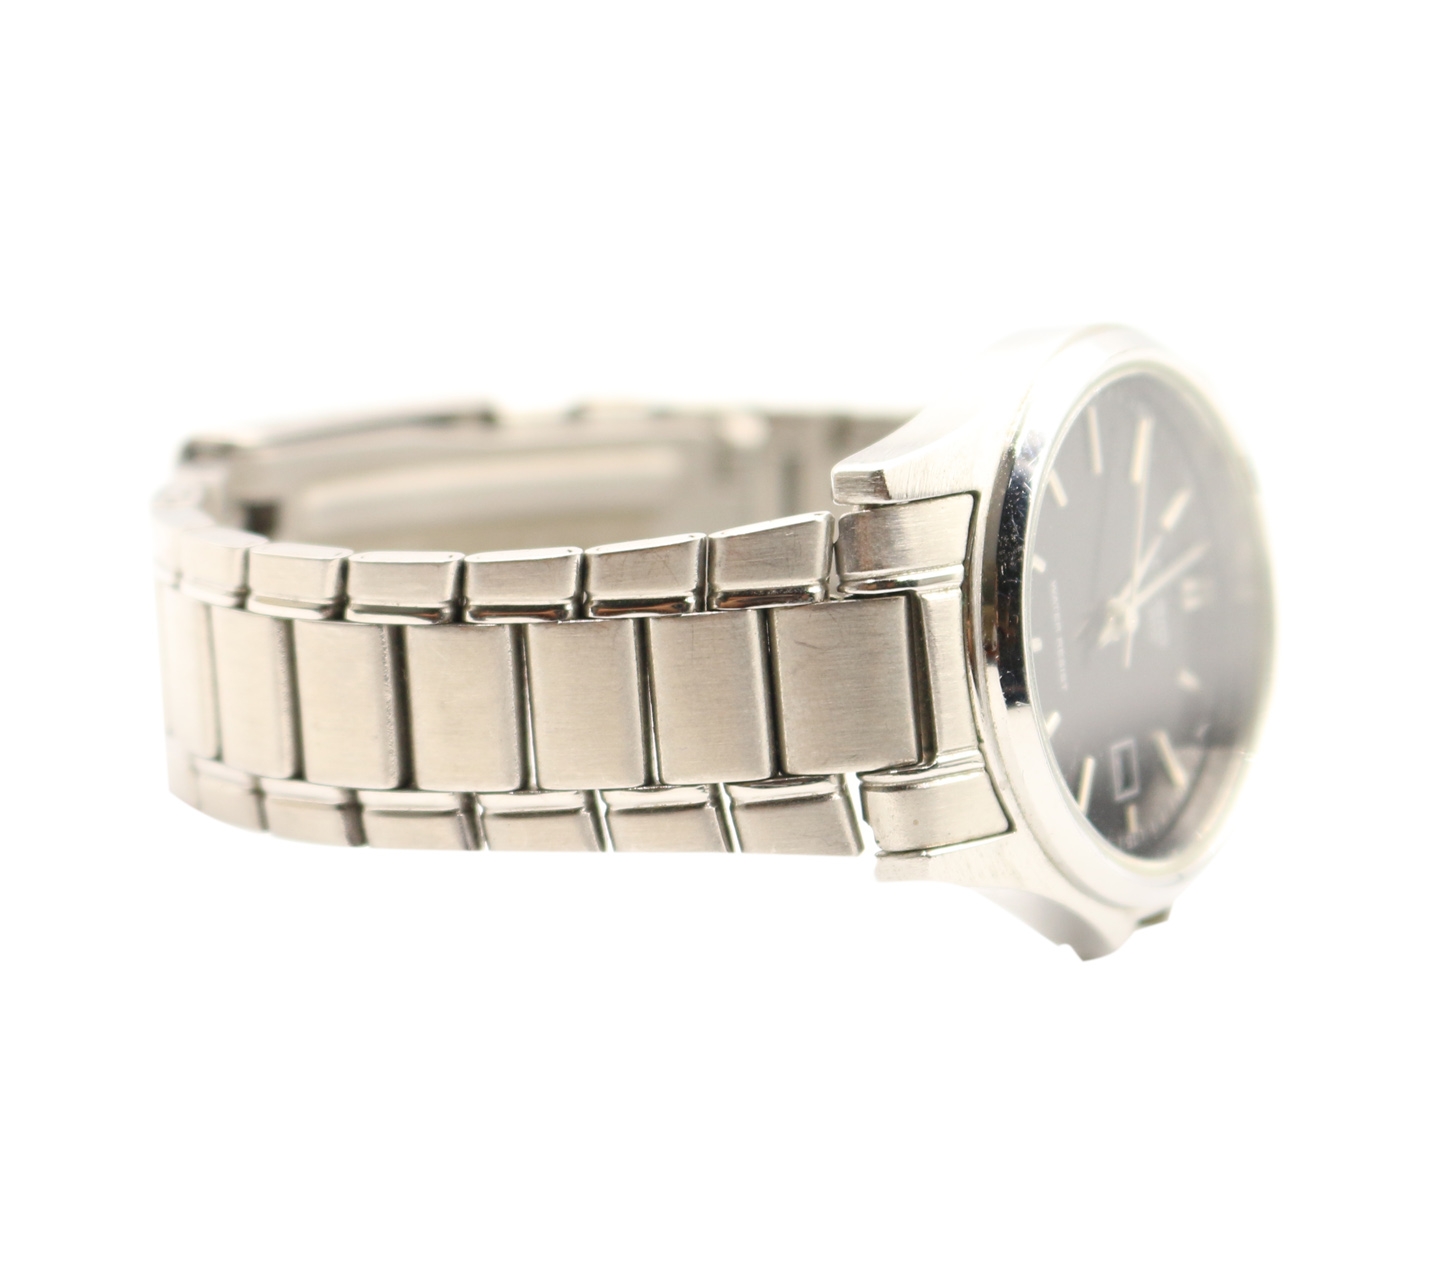 Casio Silver LTP-1183 module 2725 Vintage Rare Watch WR50 Classic Quartz Old Retro Wristwatch